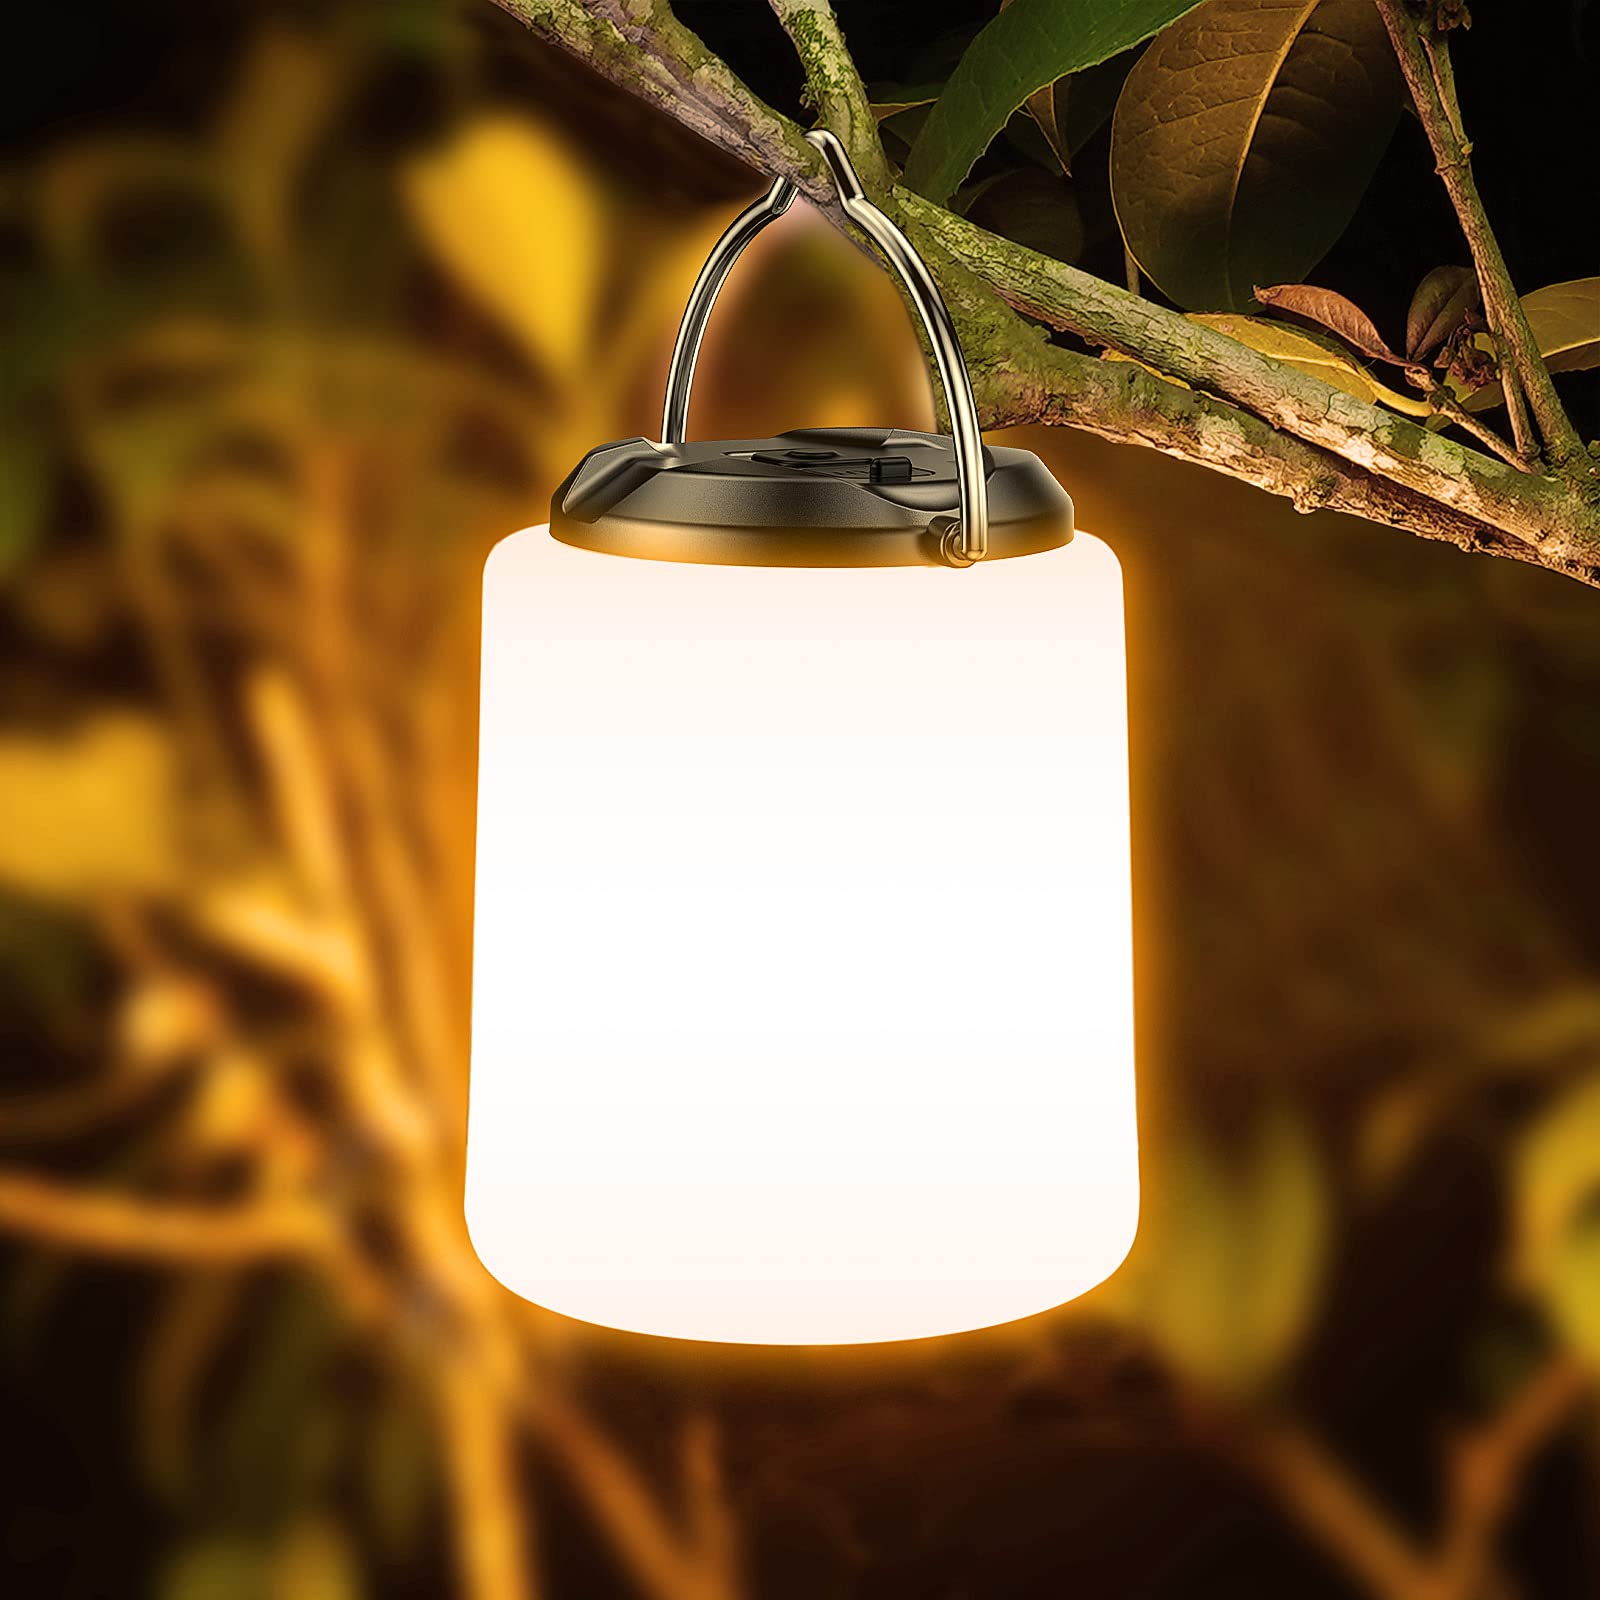 Blukar Camping Lantern Rechargeable - 3000K Warm Light, Brightness Adjustable,3 Light Modes